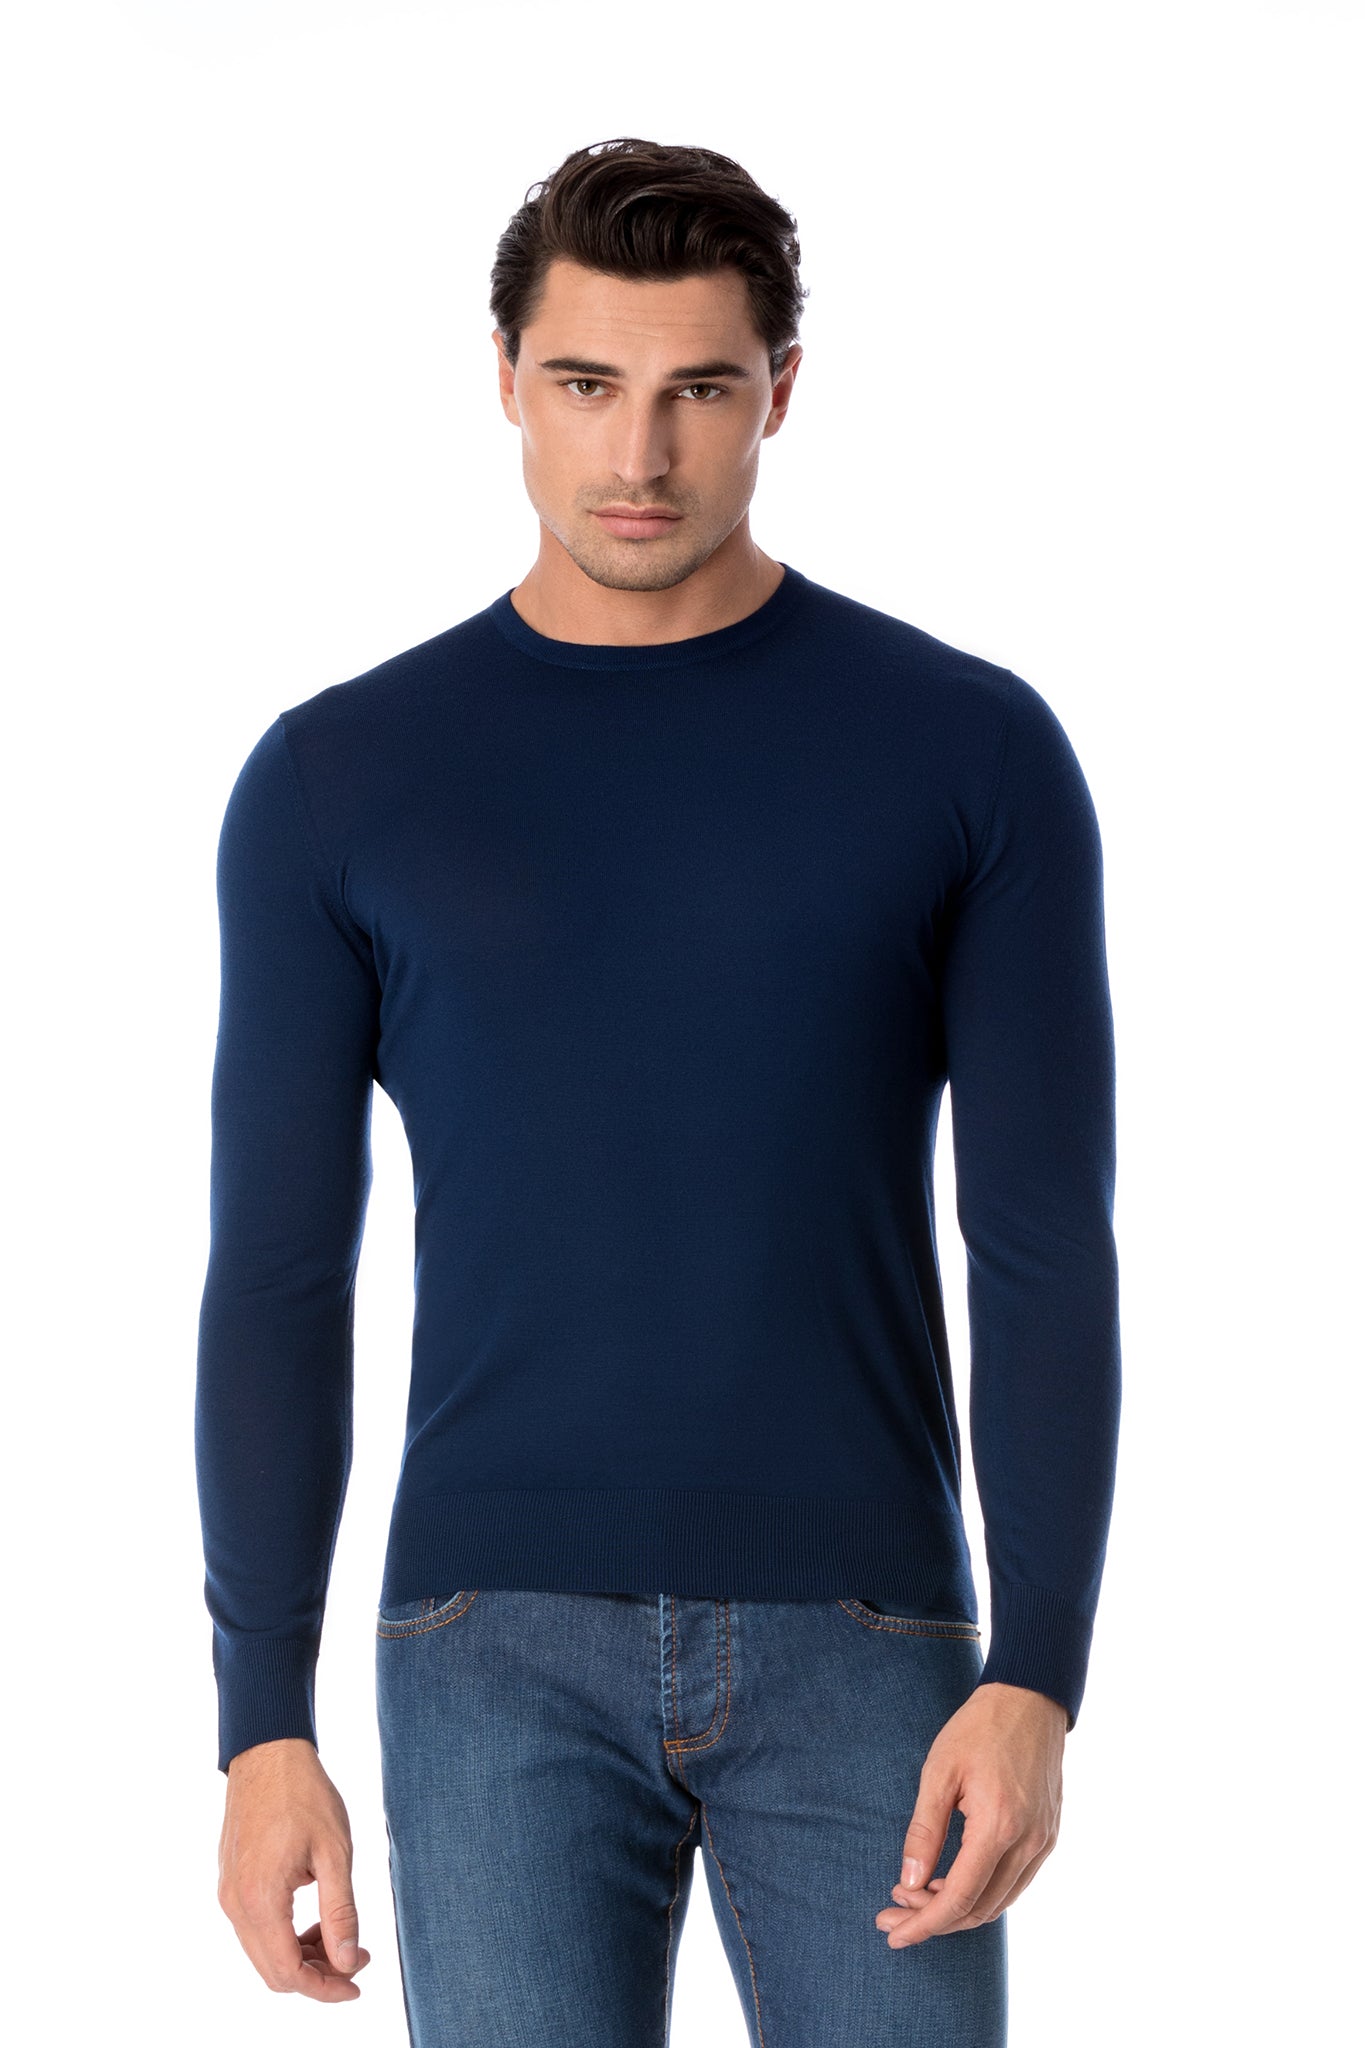 Maglione in pregiata lana merino blu navy